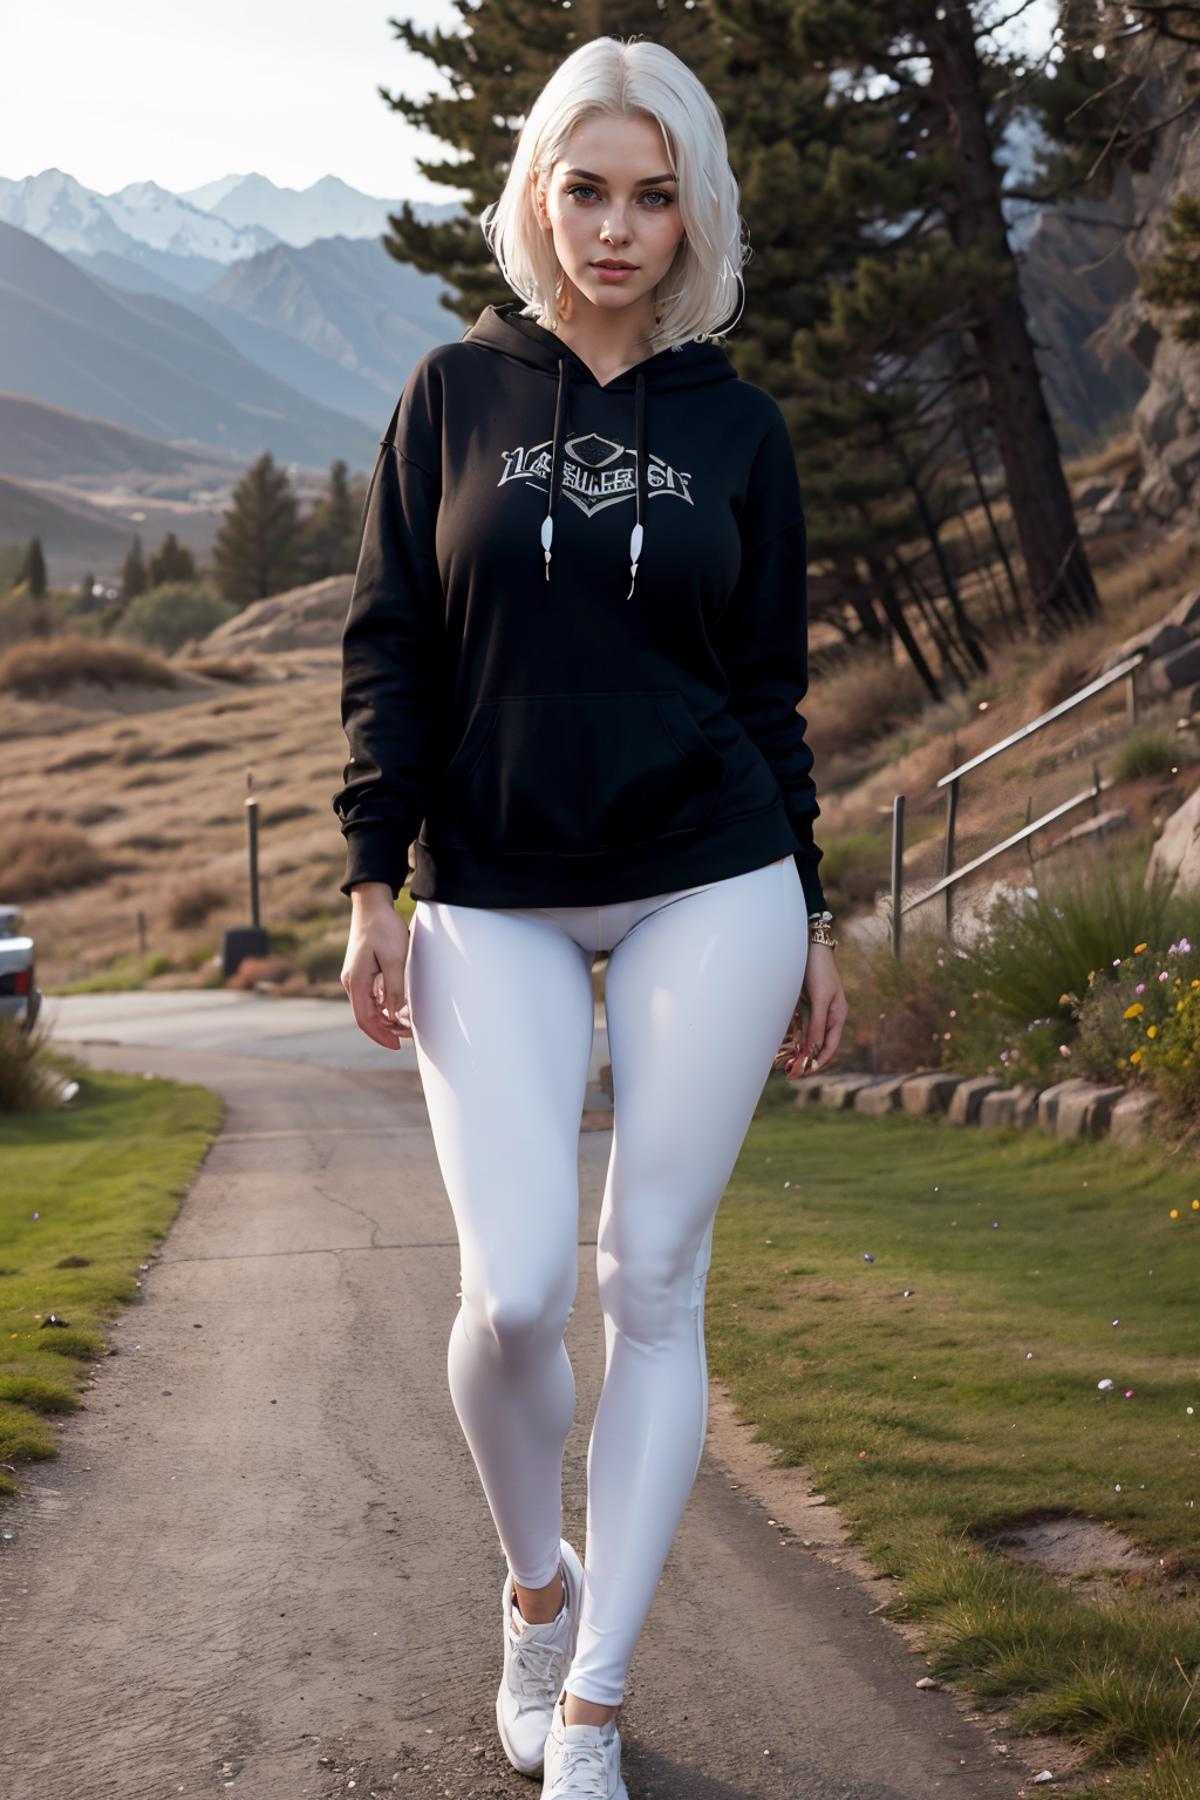 A woman wearing tight white pants and a black sweatshirt is walking down a sidewalk.